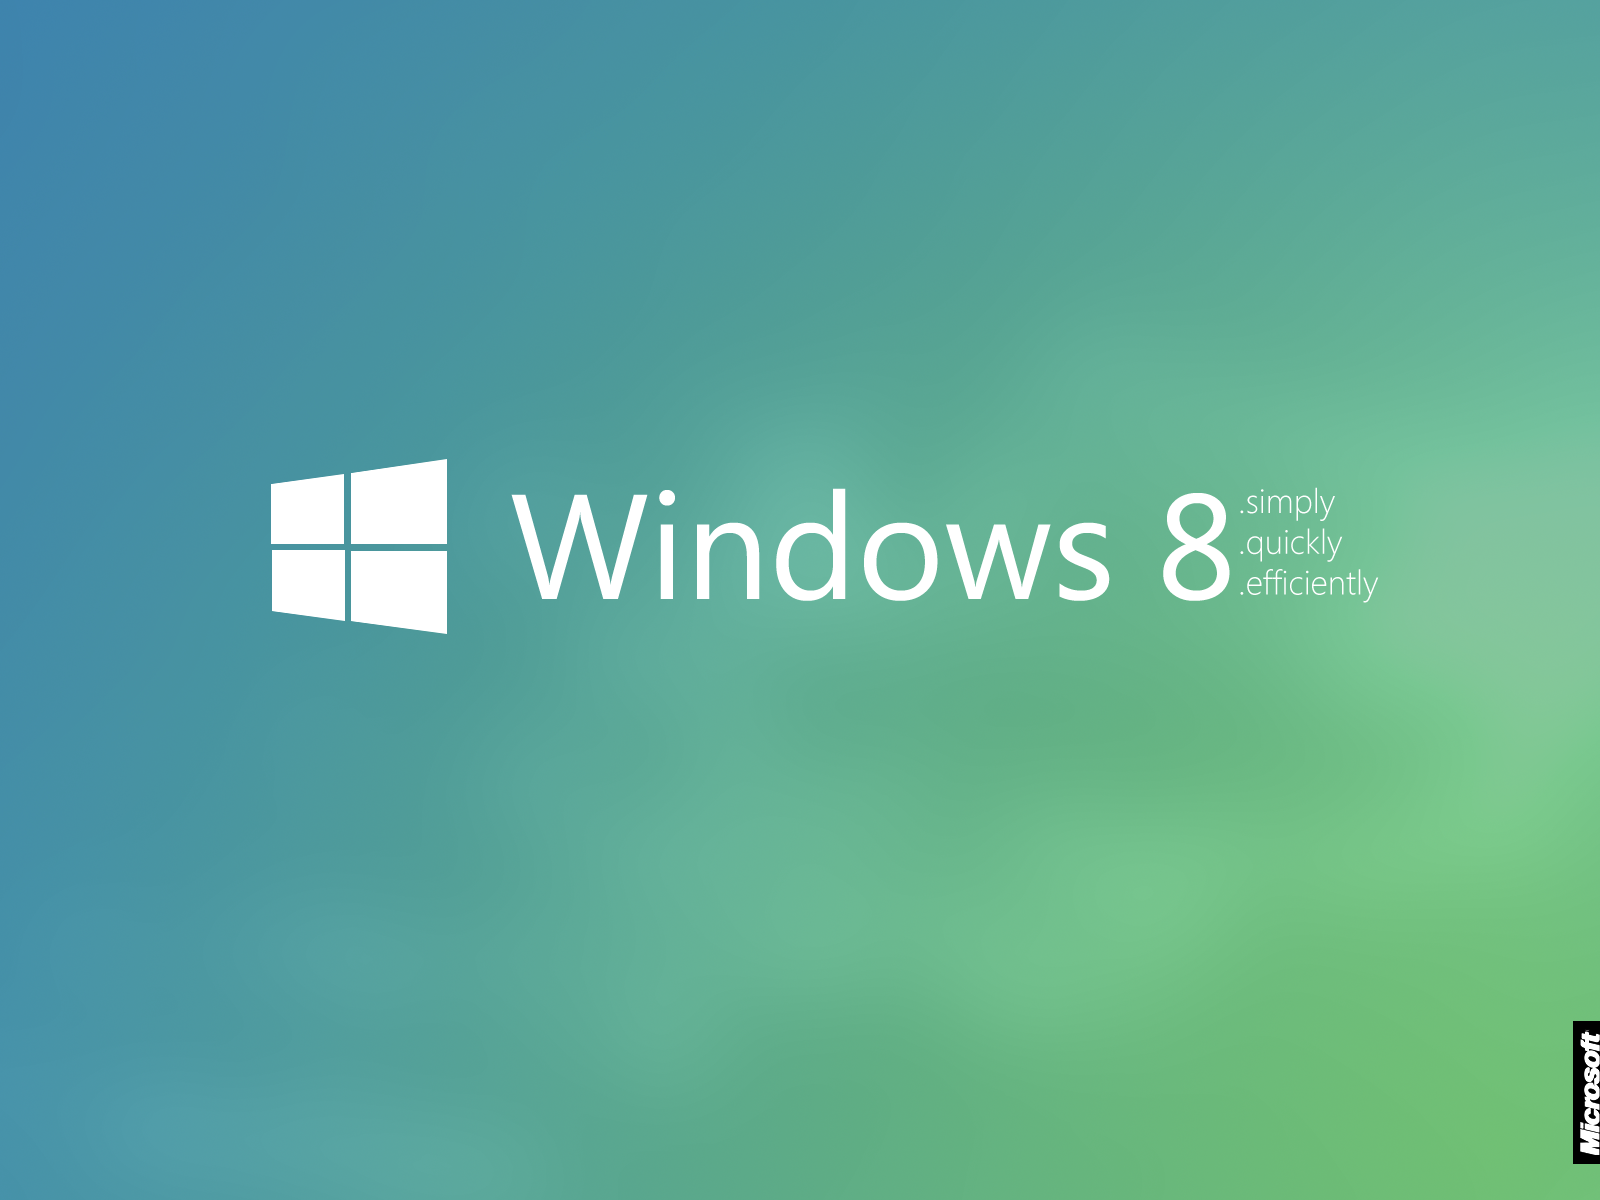 Windows 8 Microsoft Windows 壁紙 34430837 ファンポップ